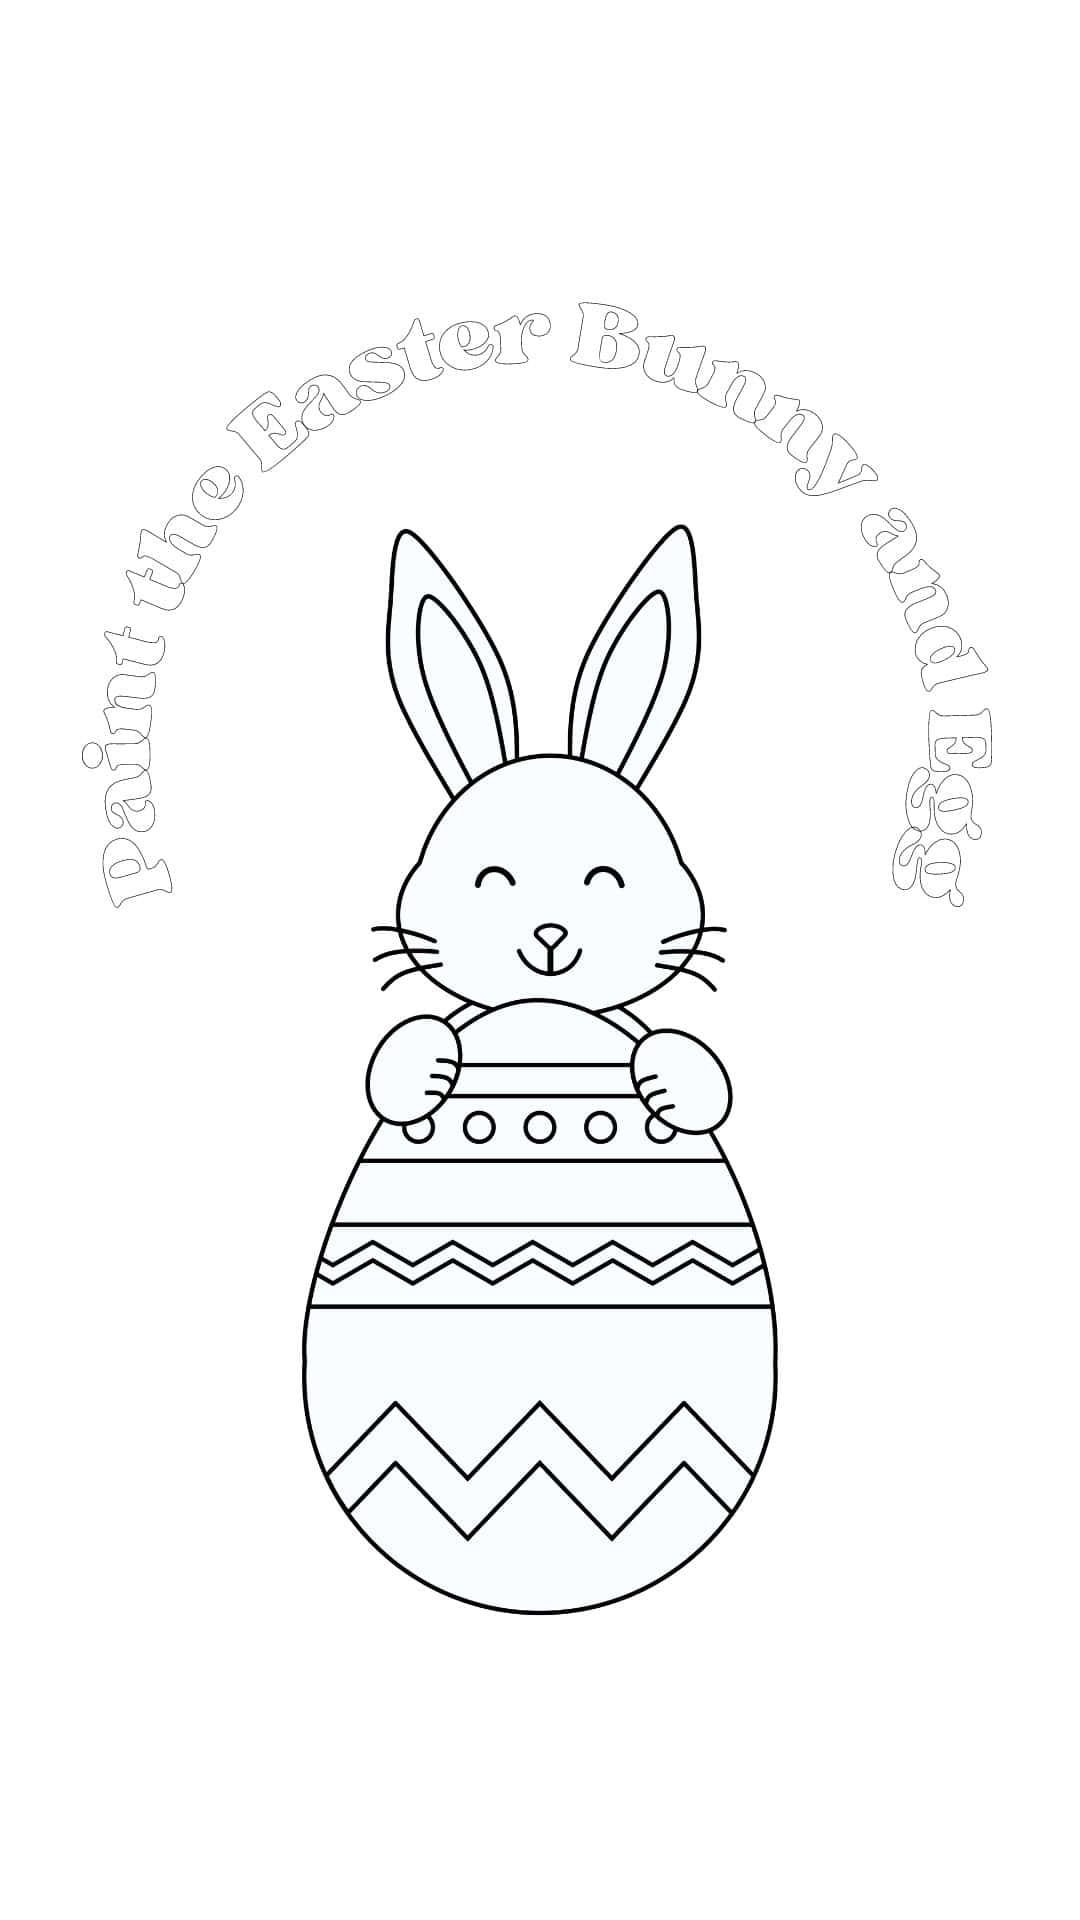 Outline Drawing Of Bunny Inside Easter Egg Background